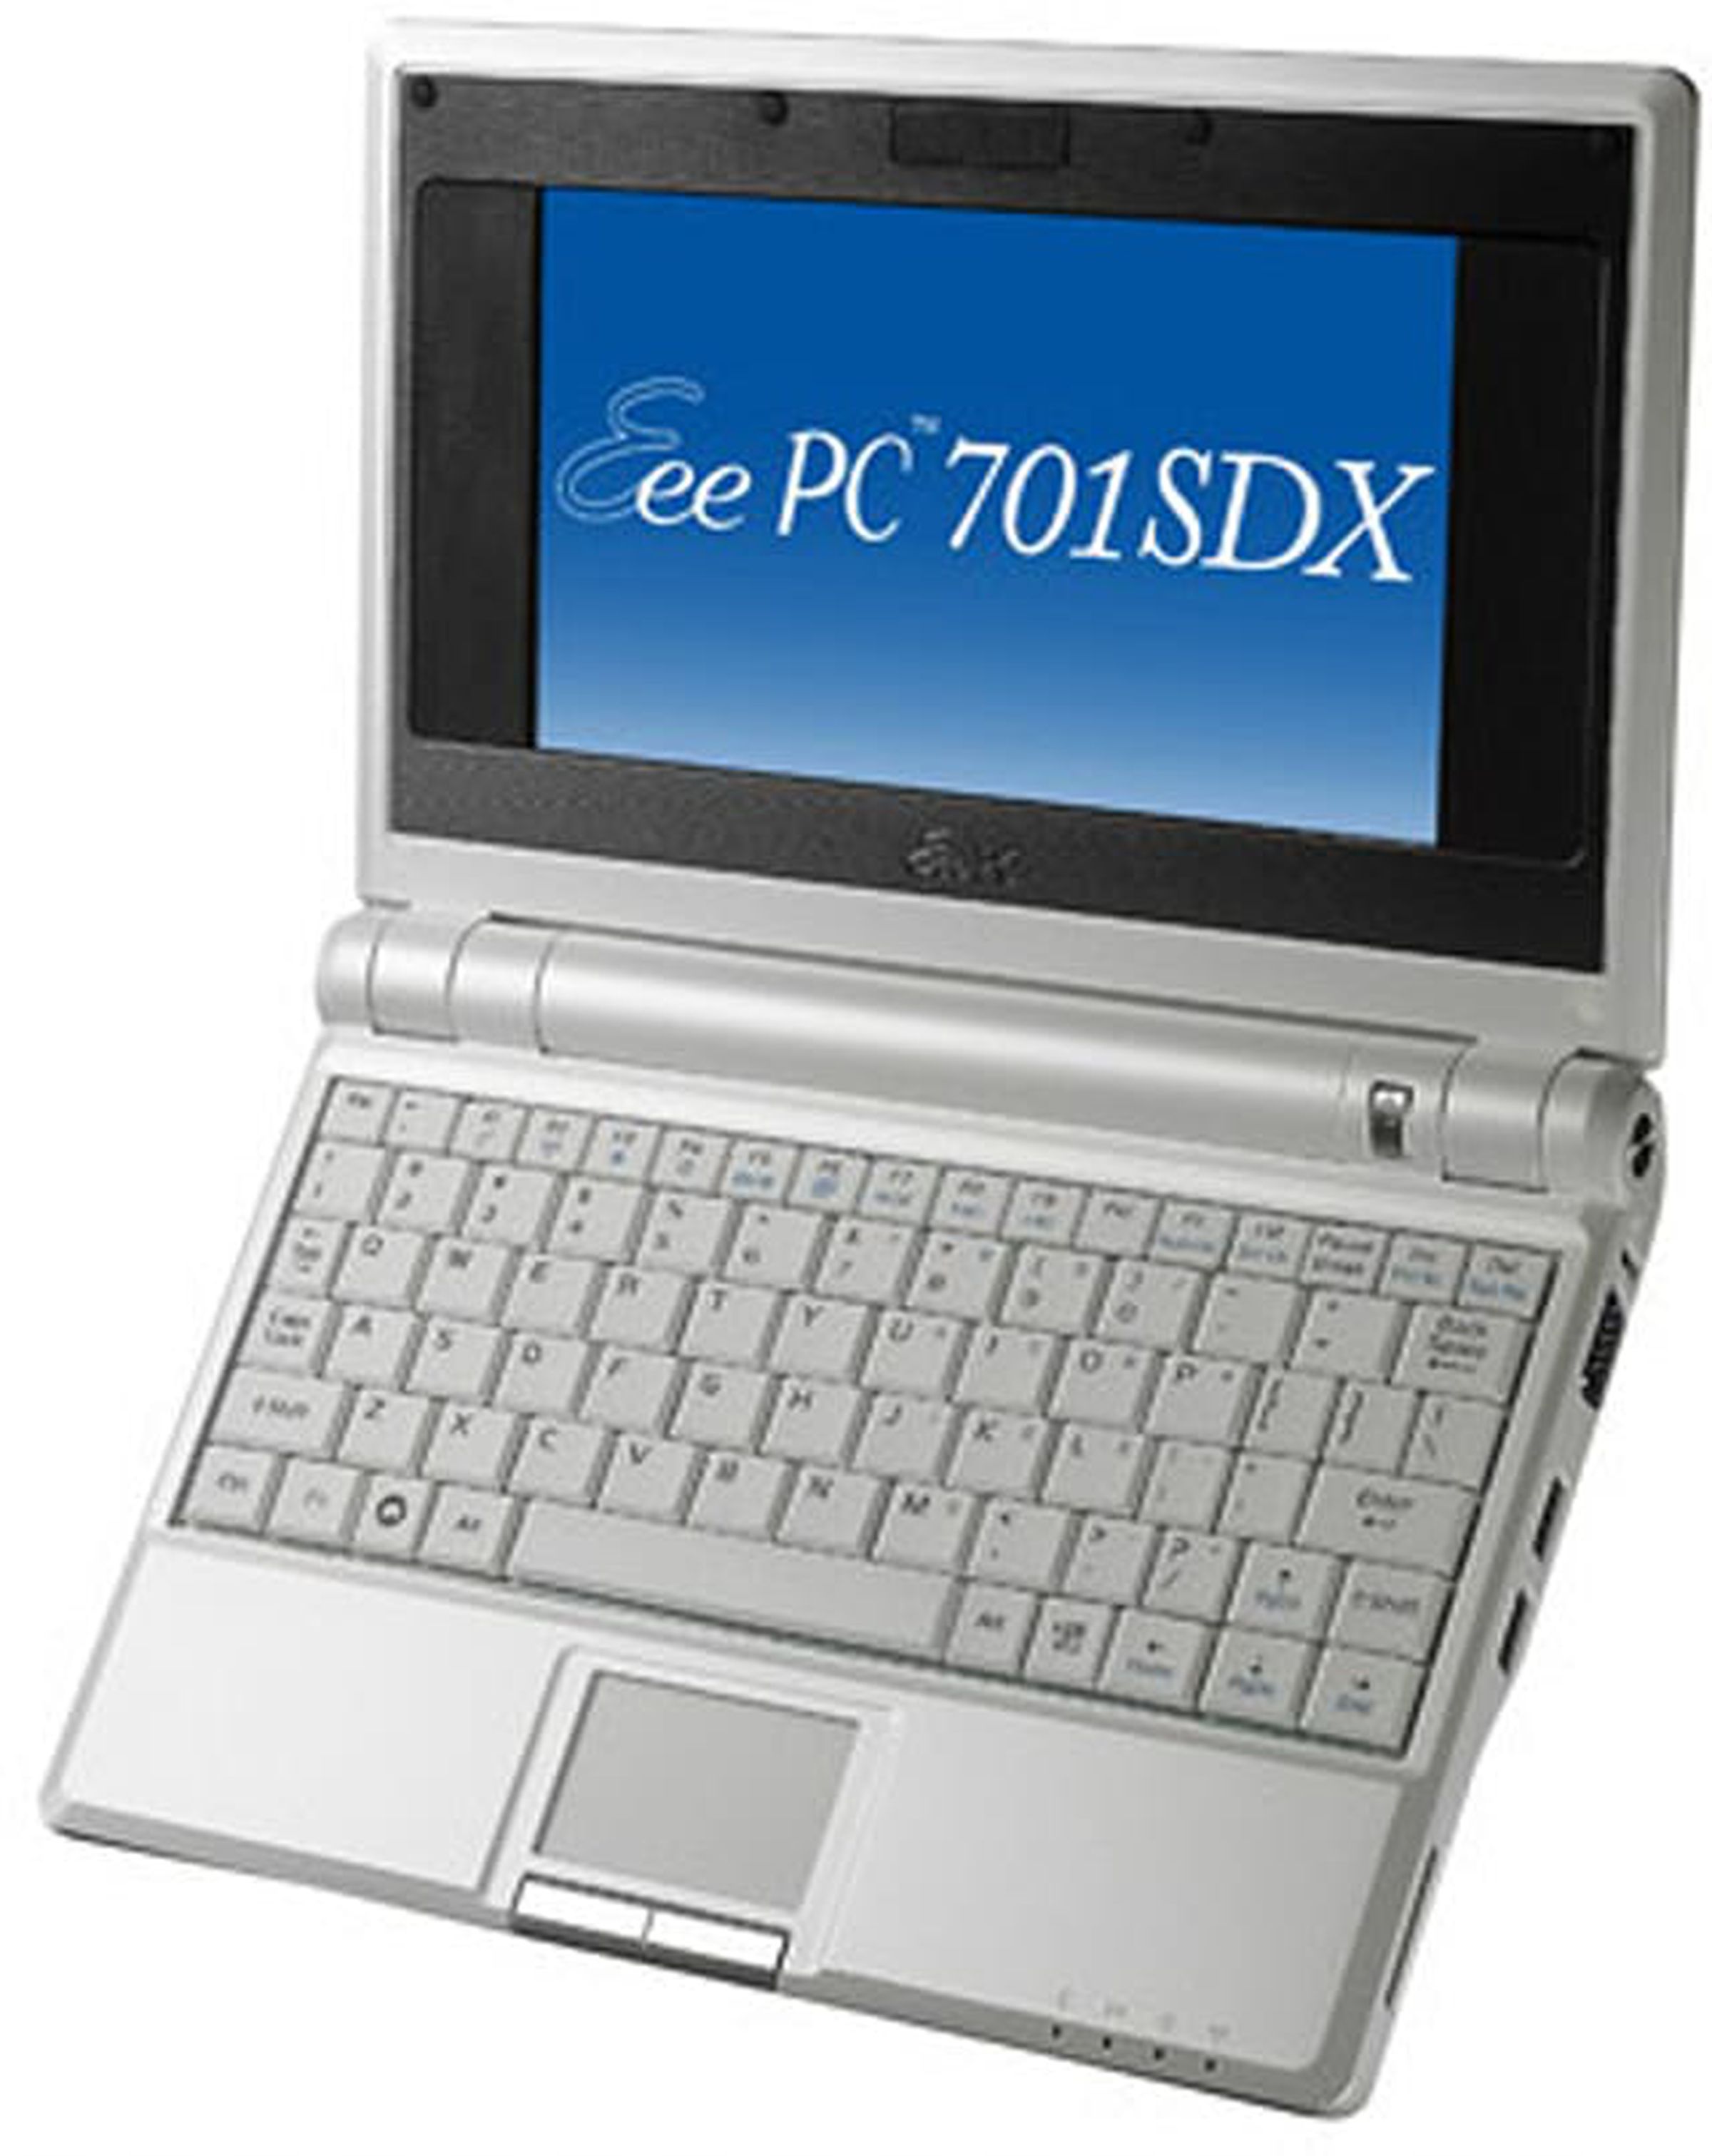 The Eee PC 701SDX